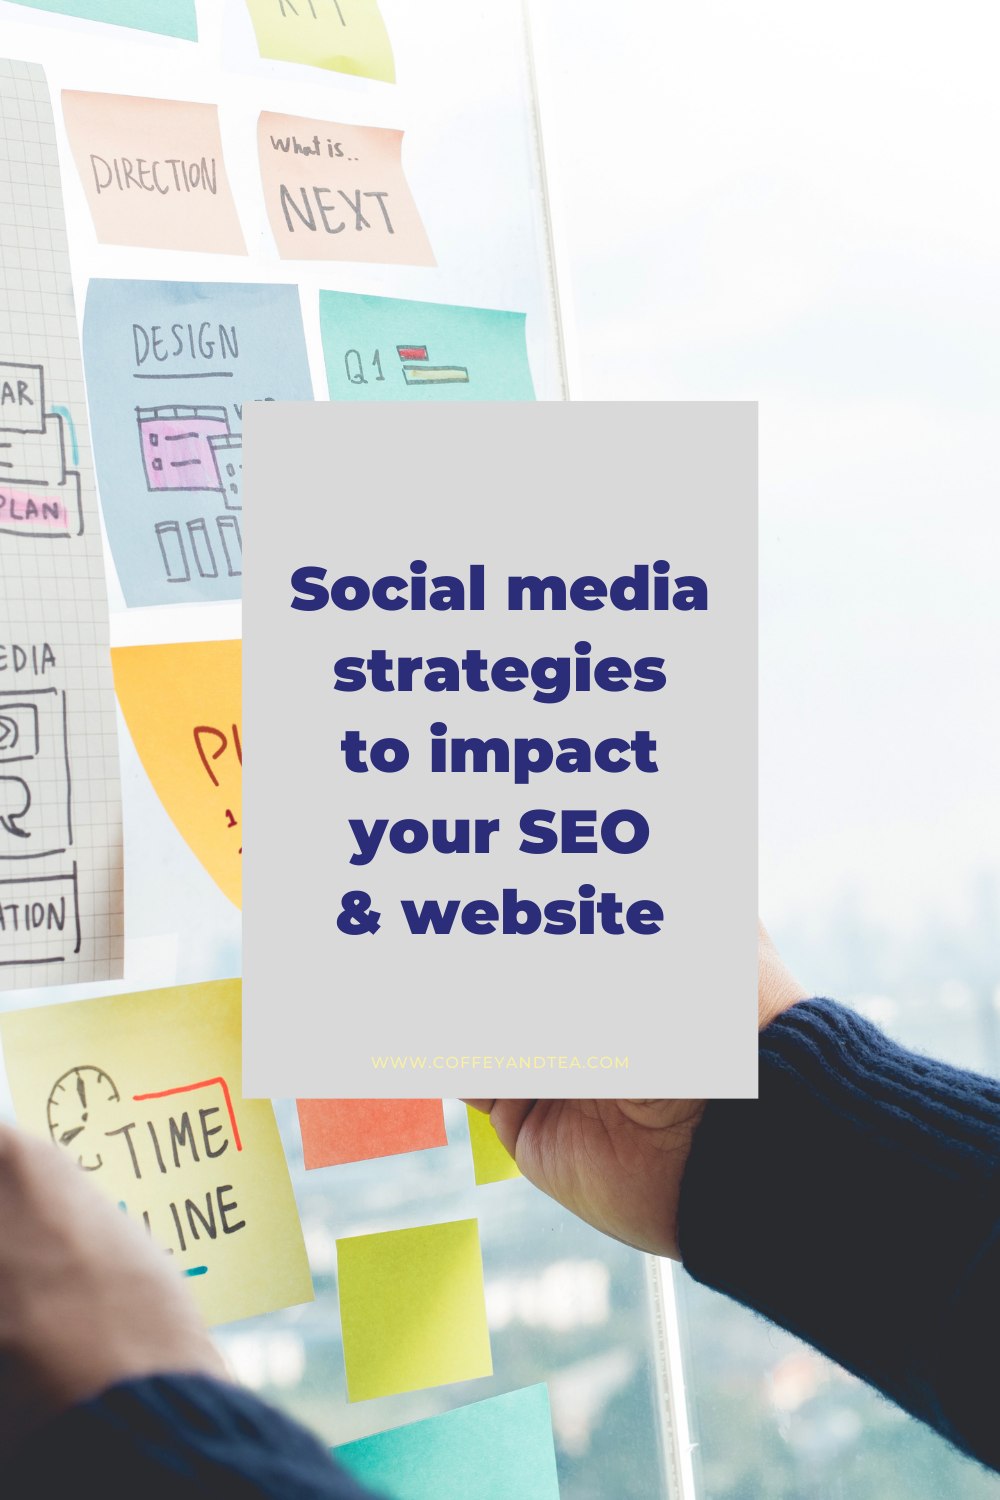 Social media strategies to impact your SEO & website